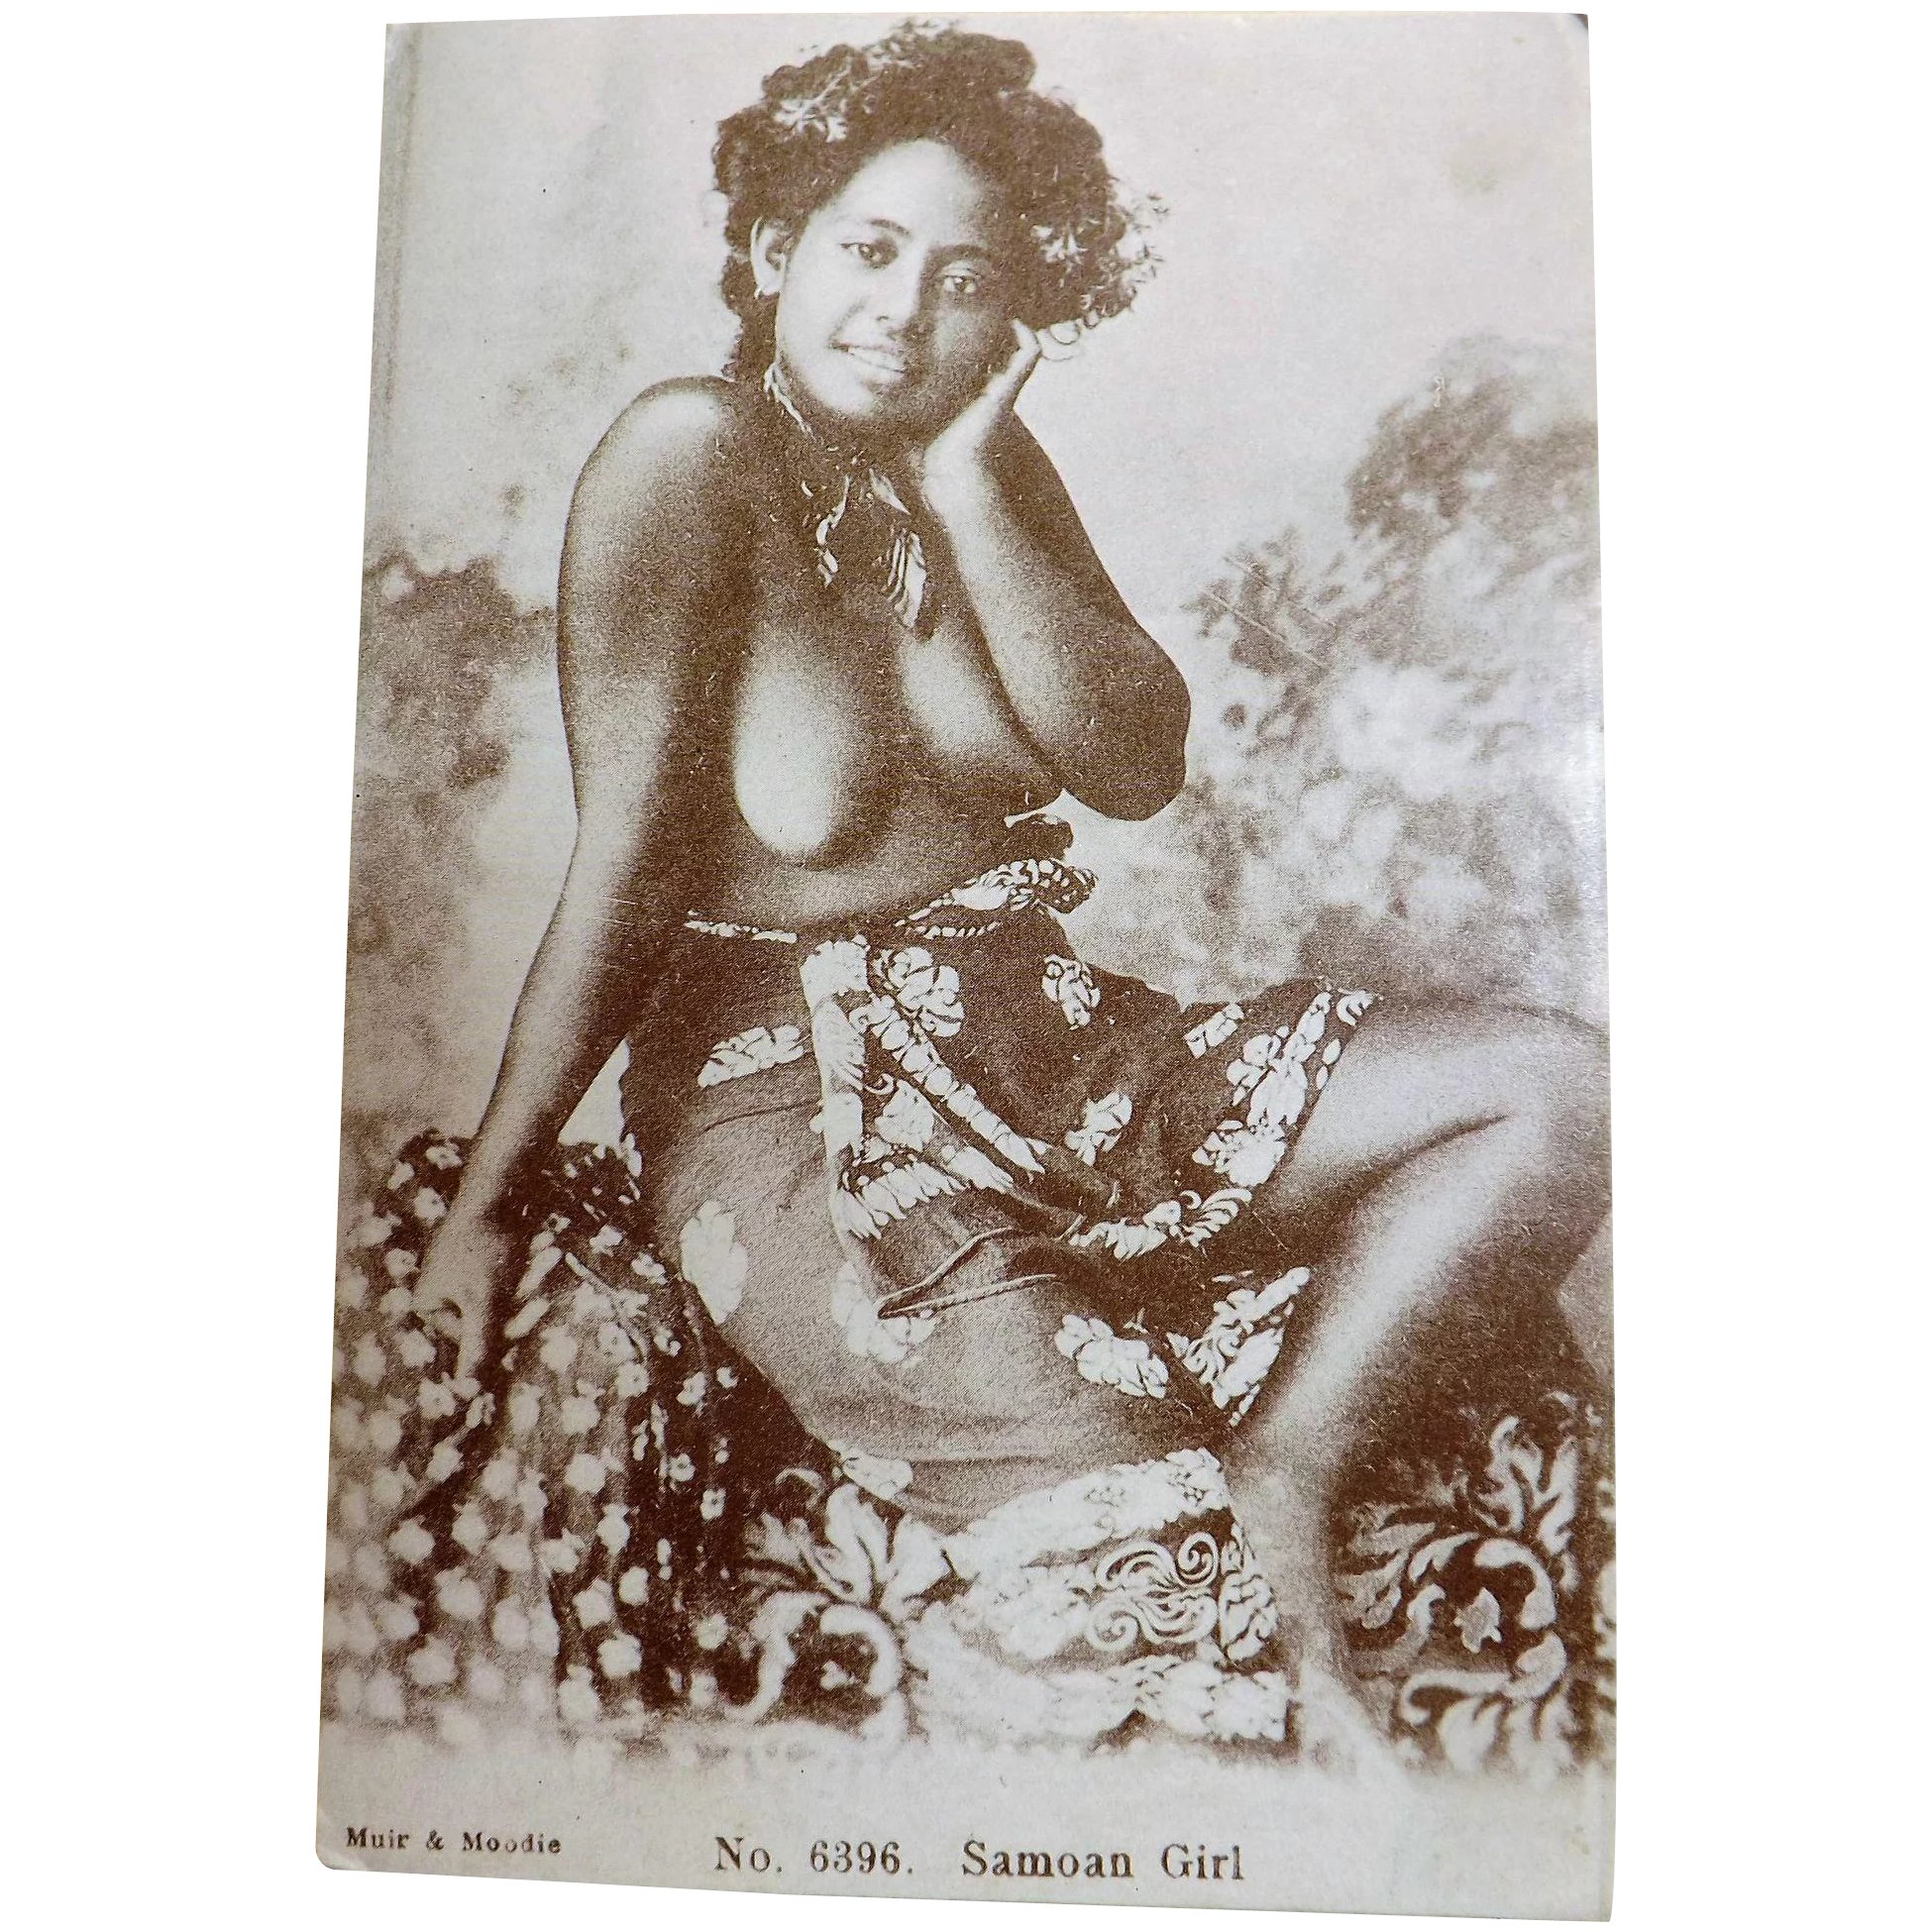 Samoan Native Girl - Muir & Moodie Photographic Cards